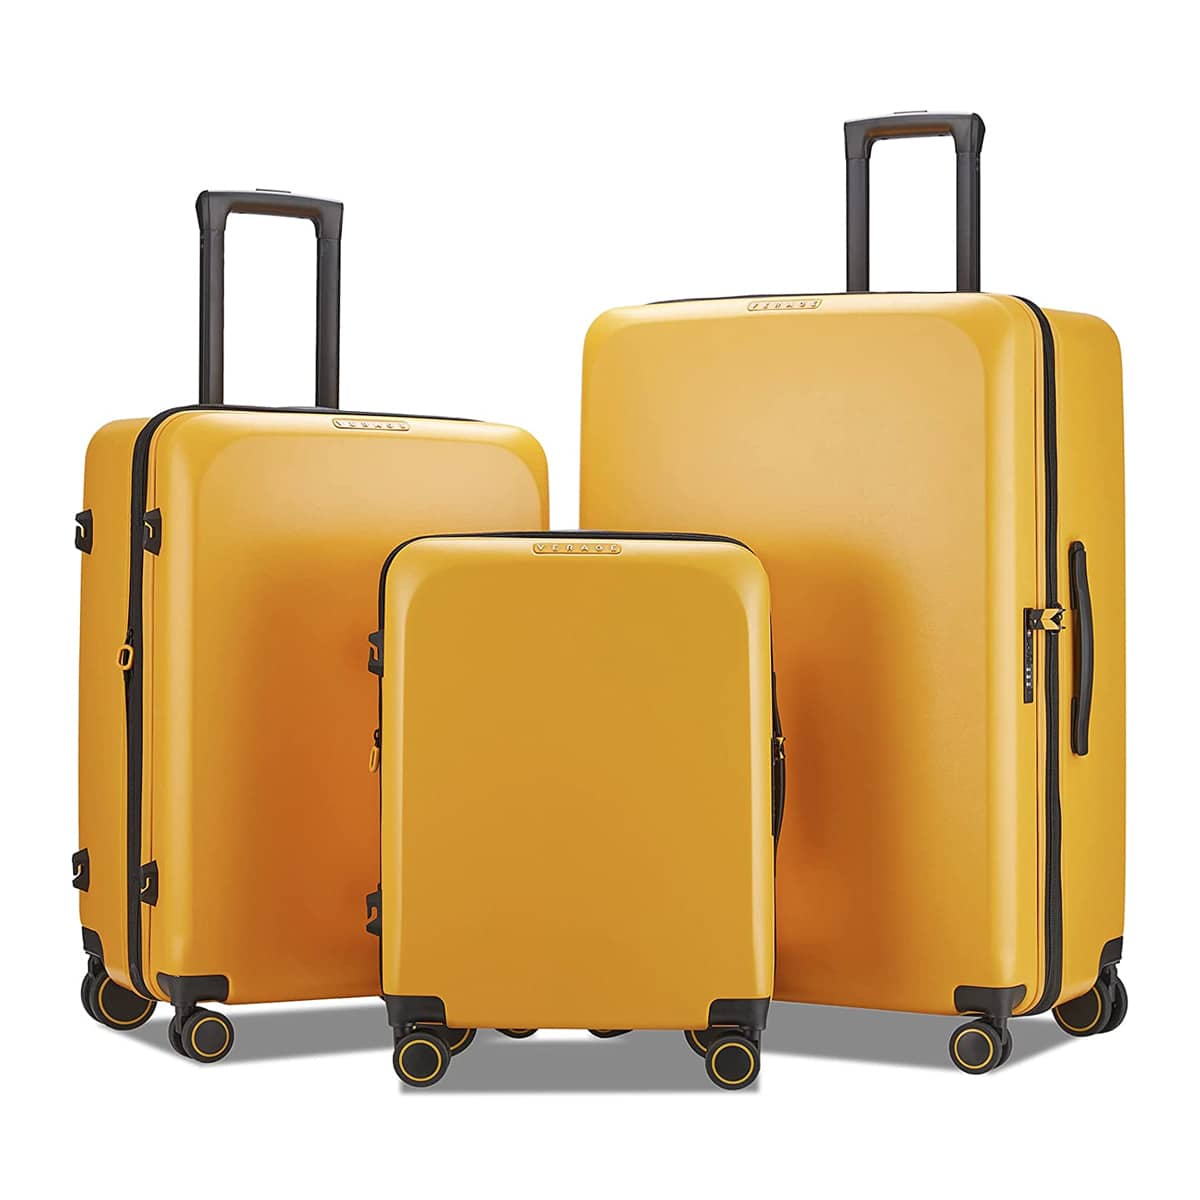 Best affordable luggage set